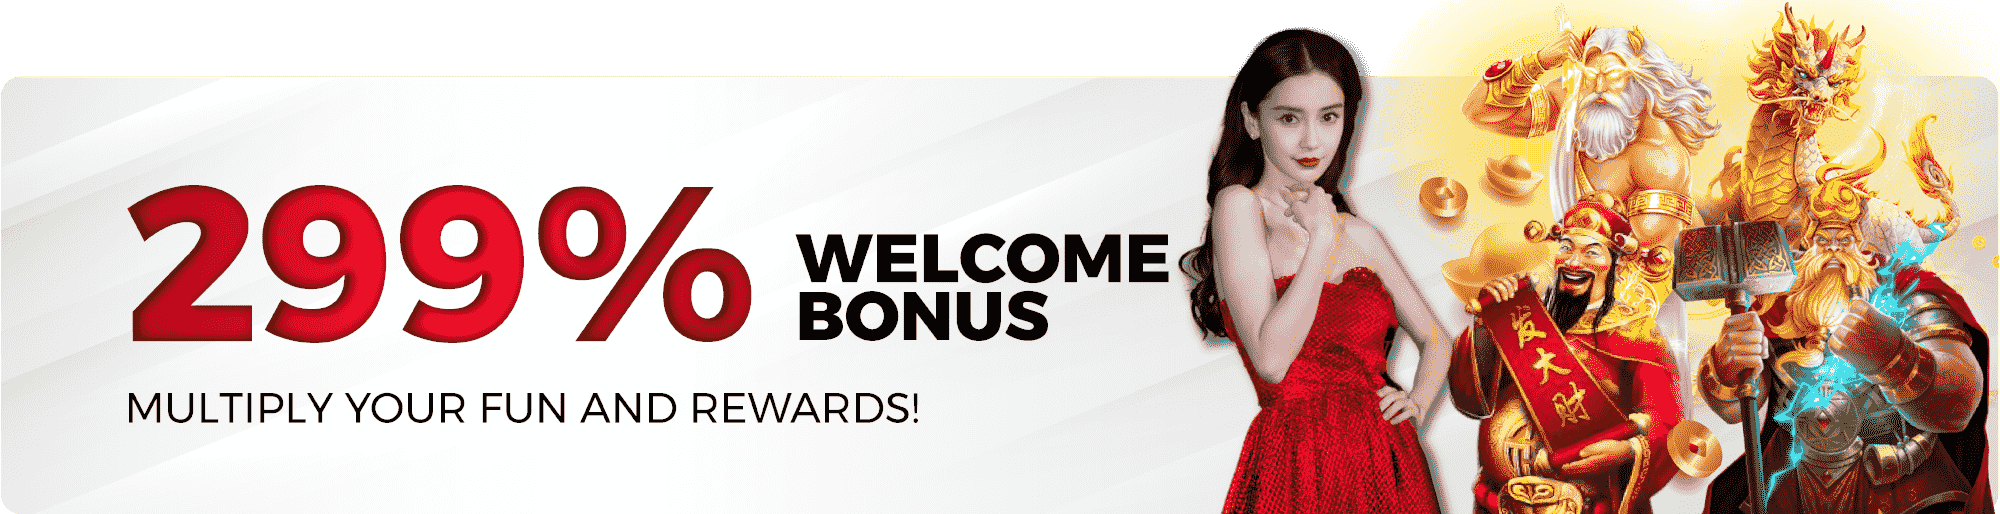 299% welcome bonus